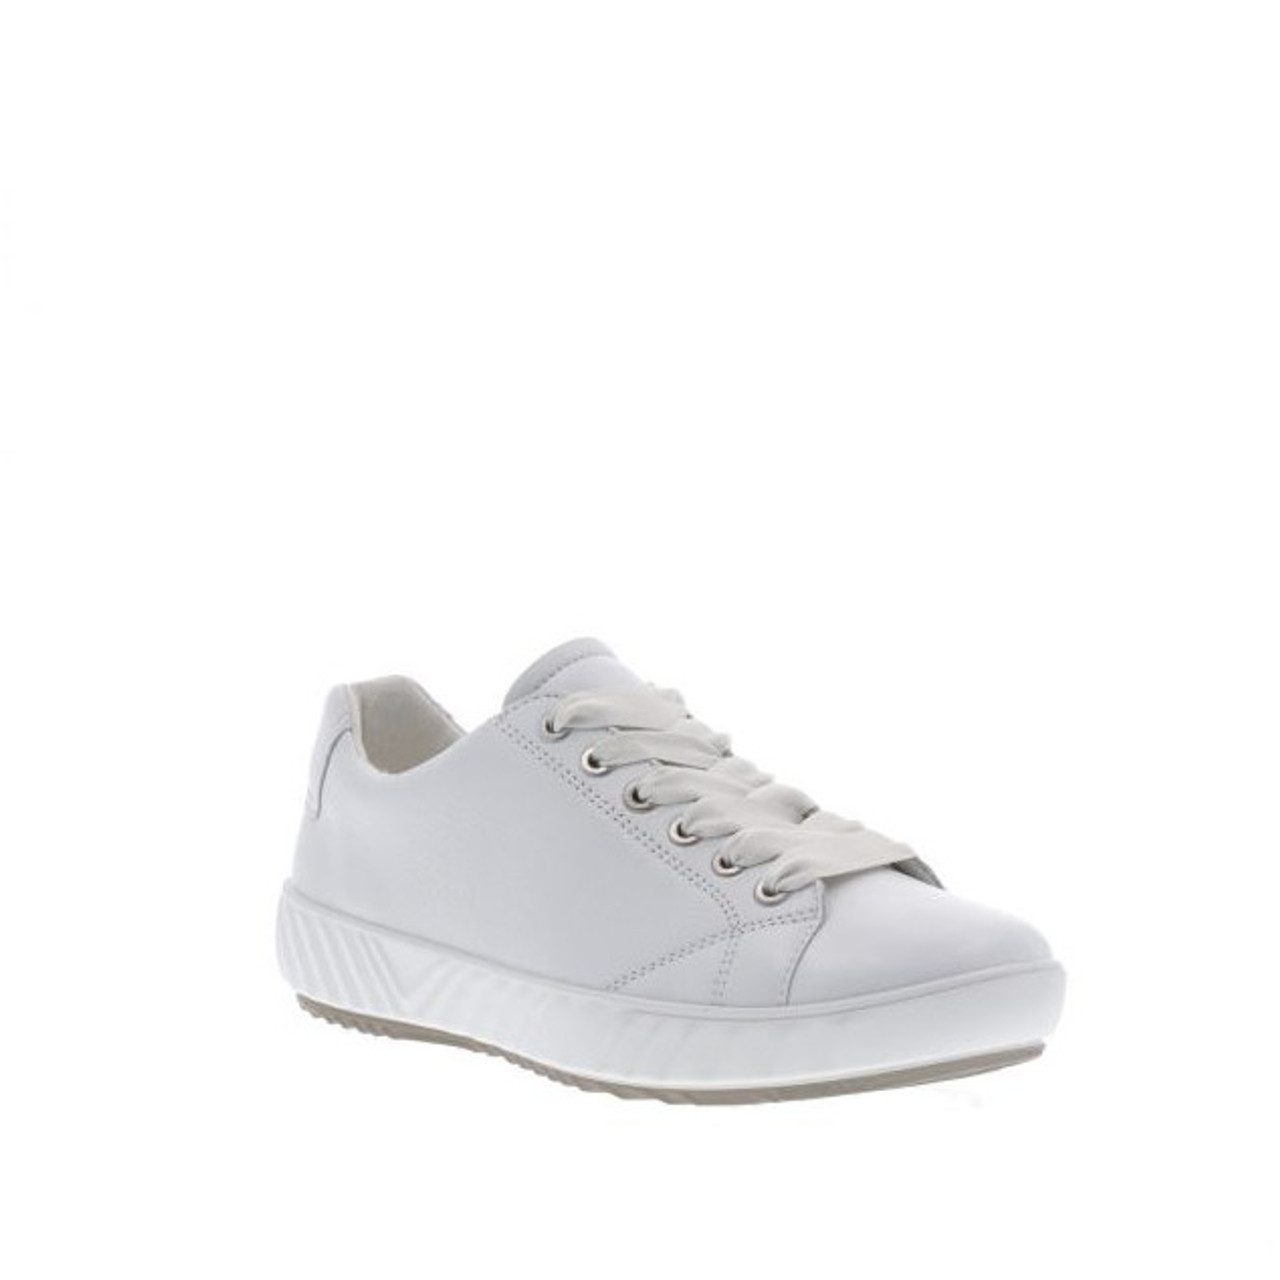 Ara AVIO 12-13640-05 H all white leather Lace shoe